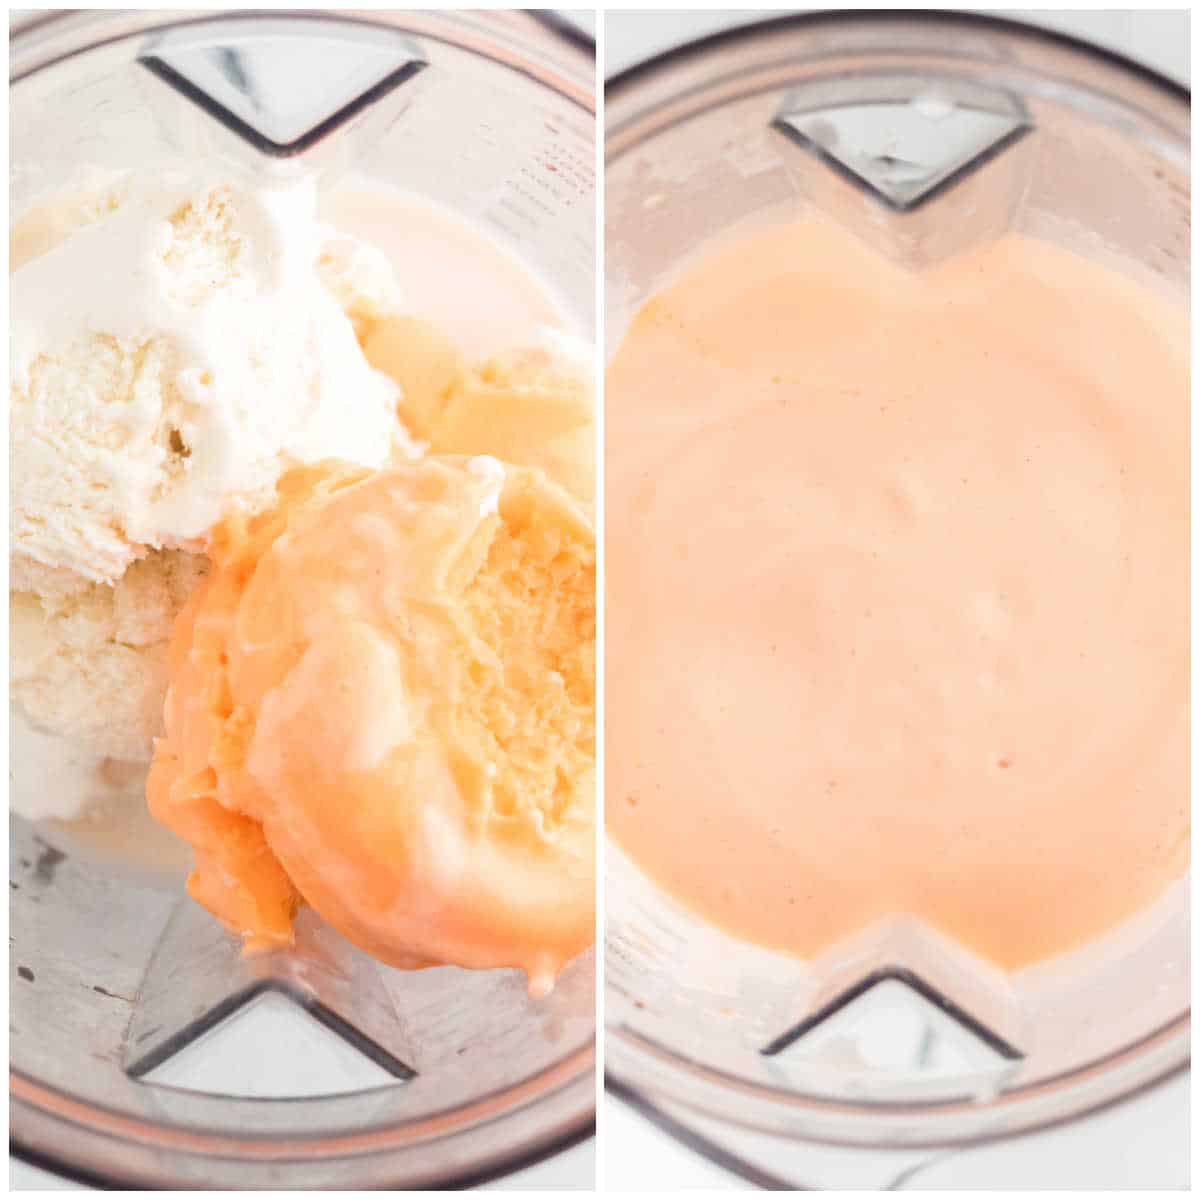 Steps to make boozy orange creamsicle milkshakes.